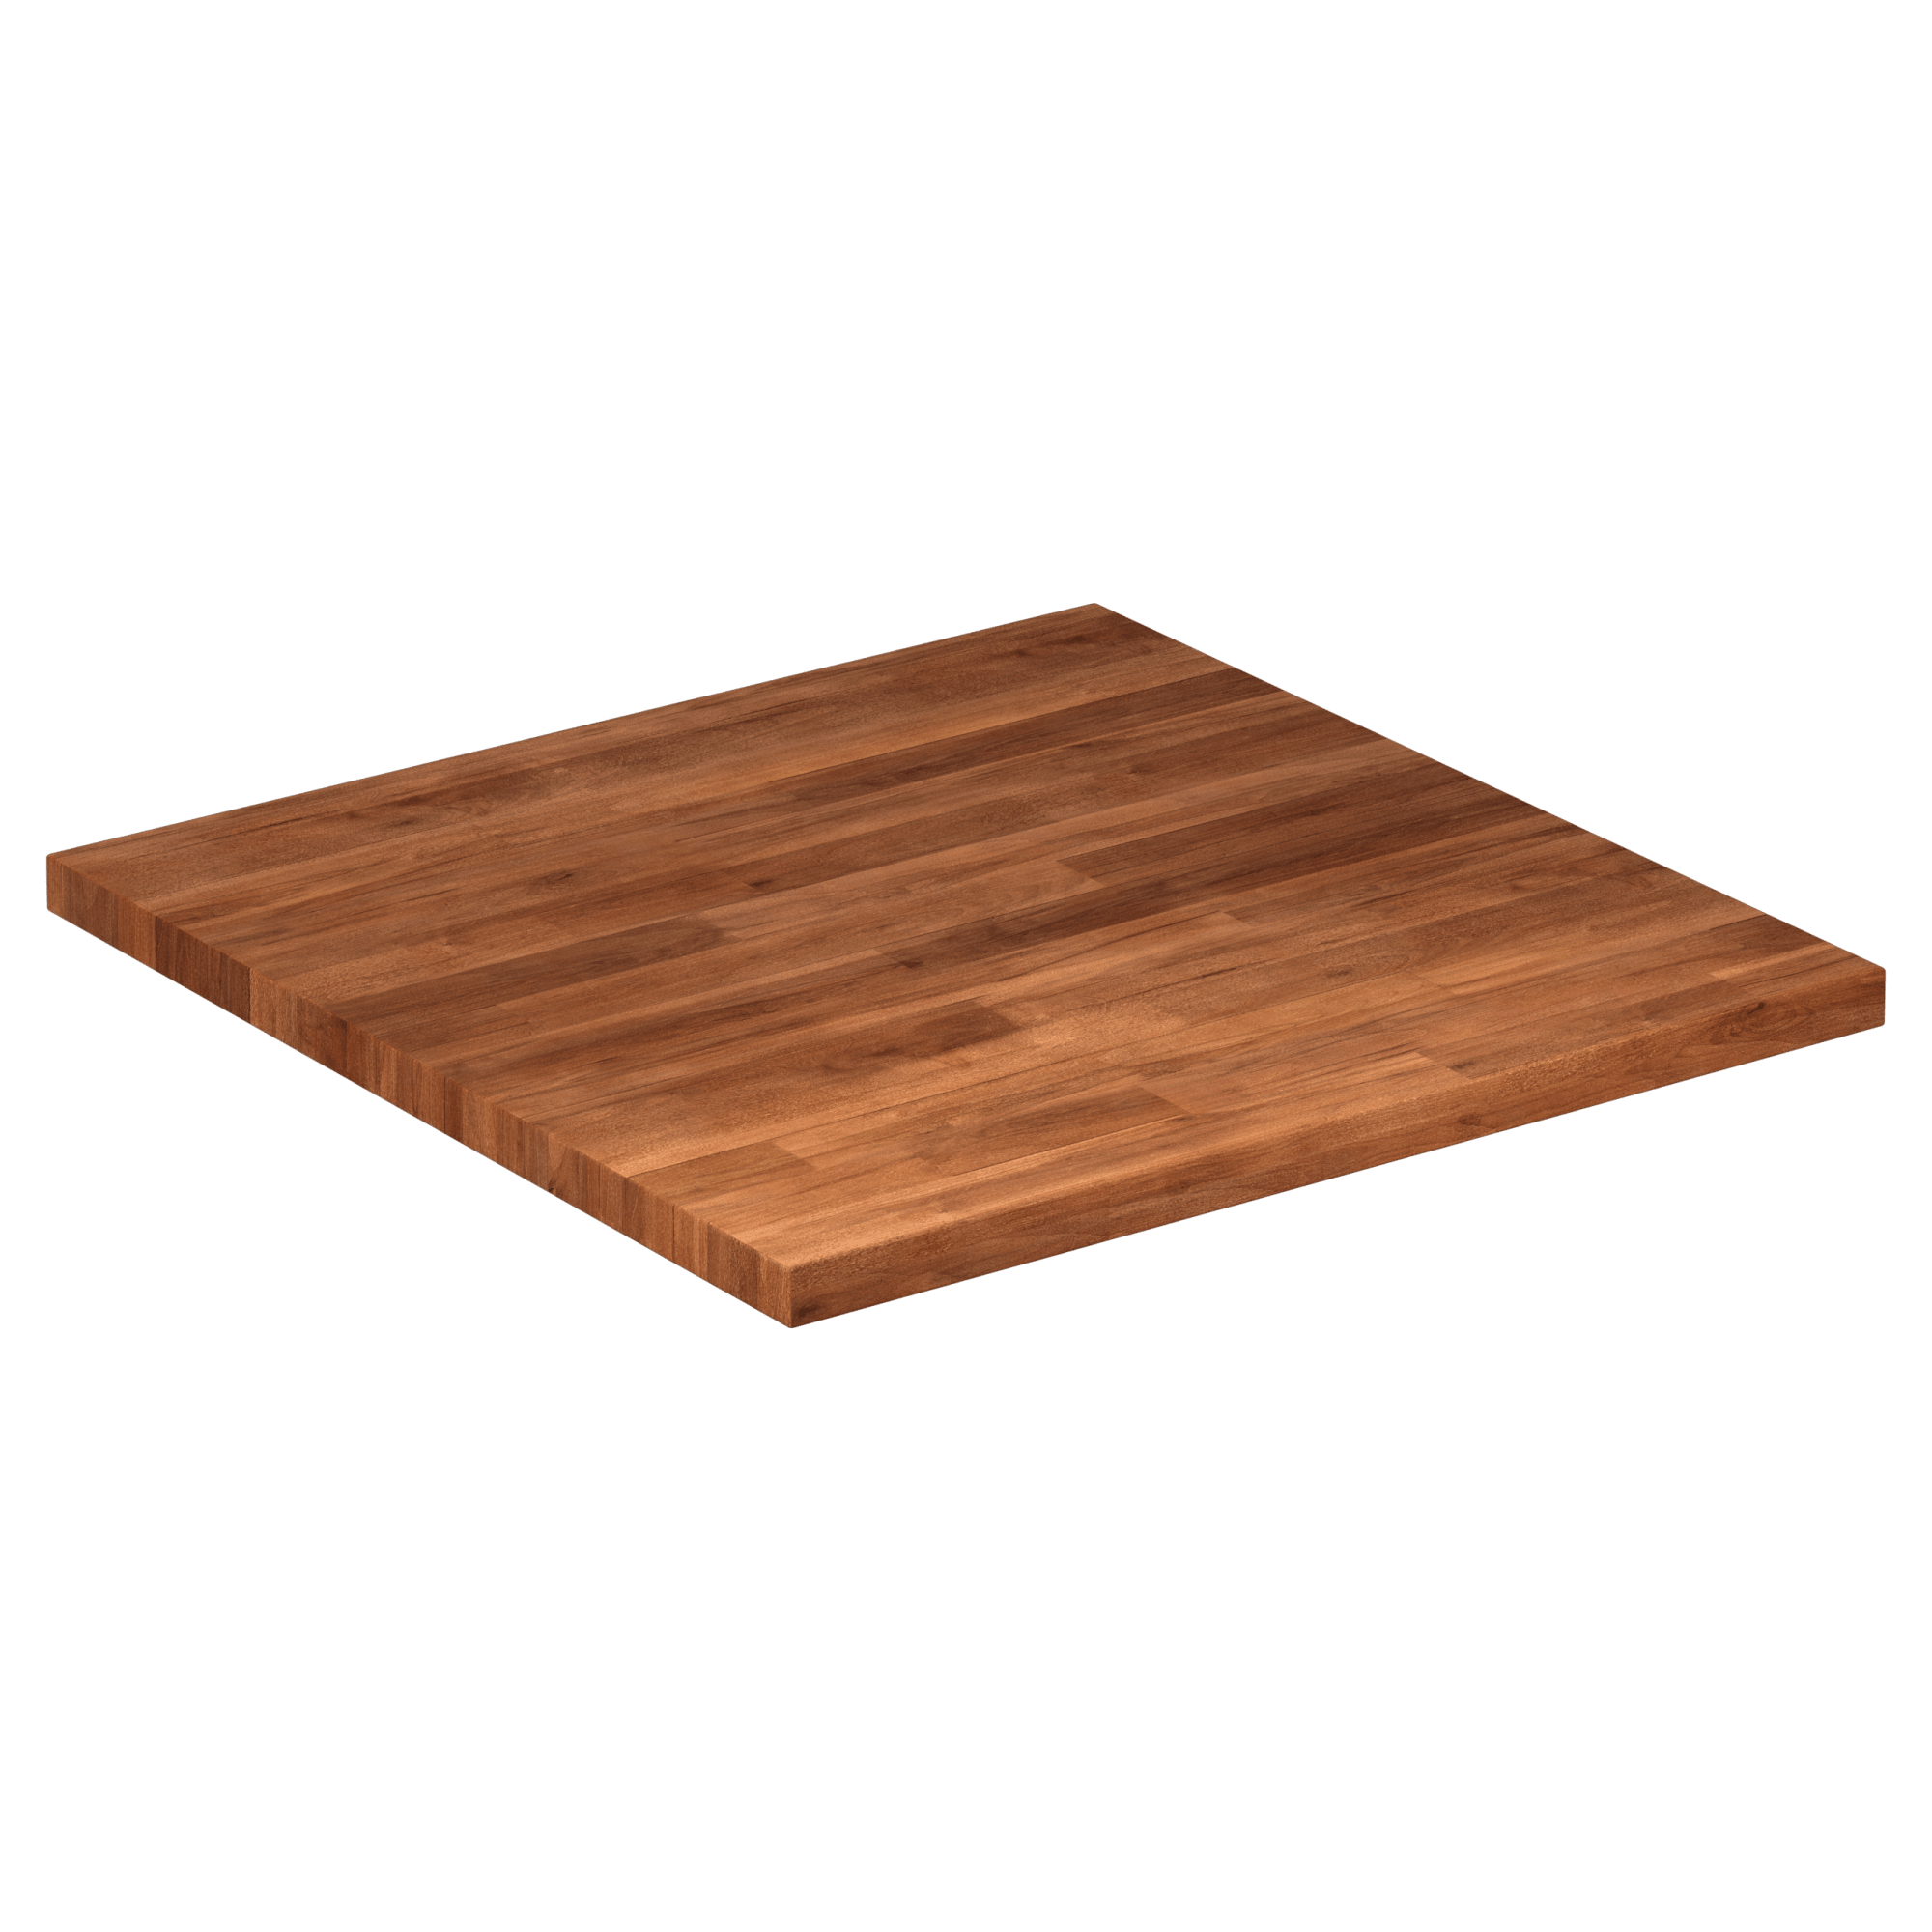 Premium Solid Wood Butcher Block Table Top with Premium Solid Wood Butcher Block Table Top